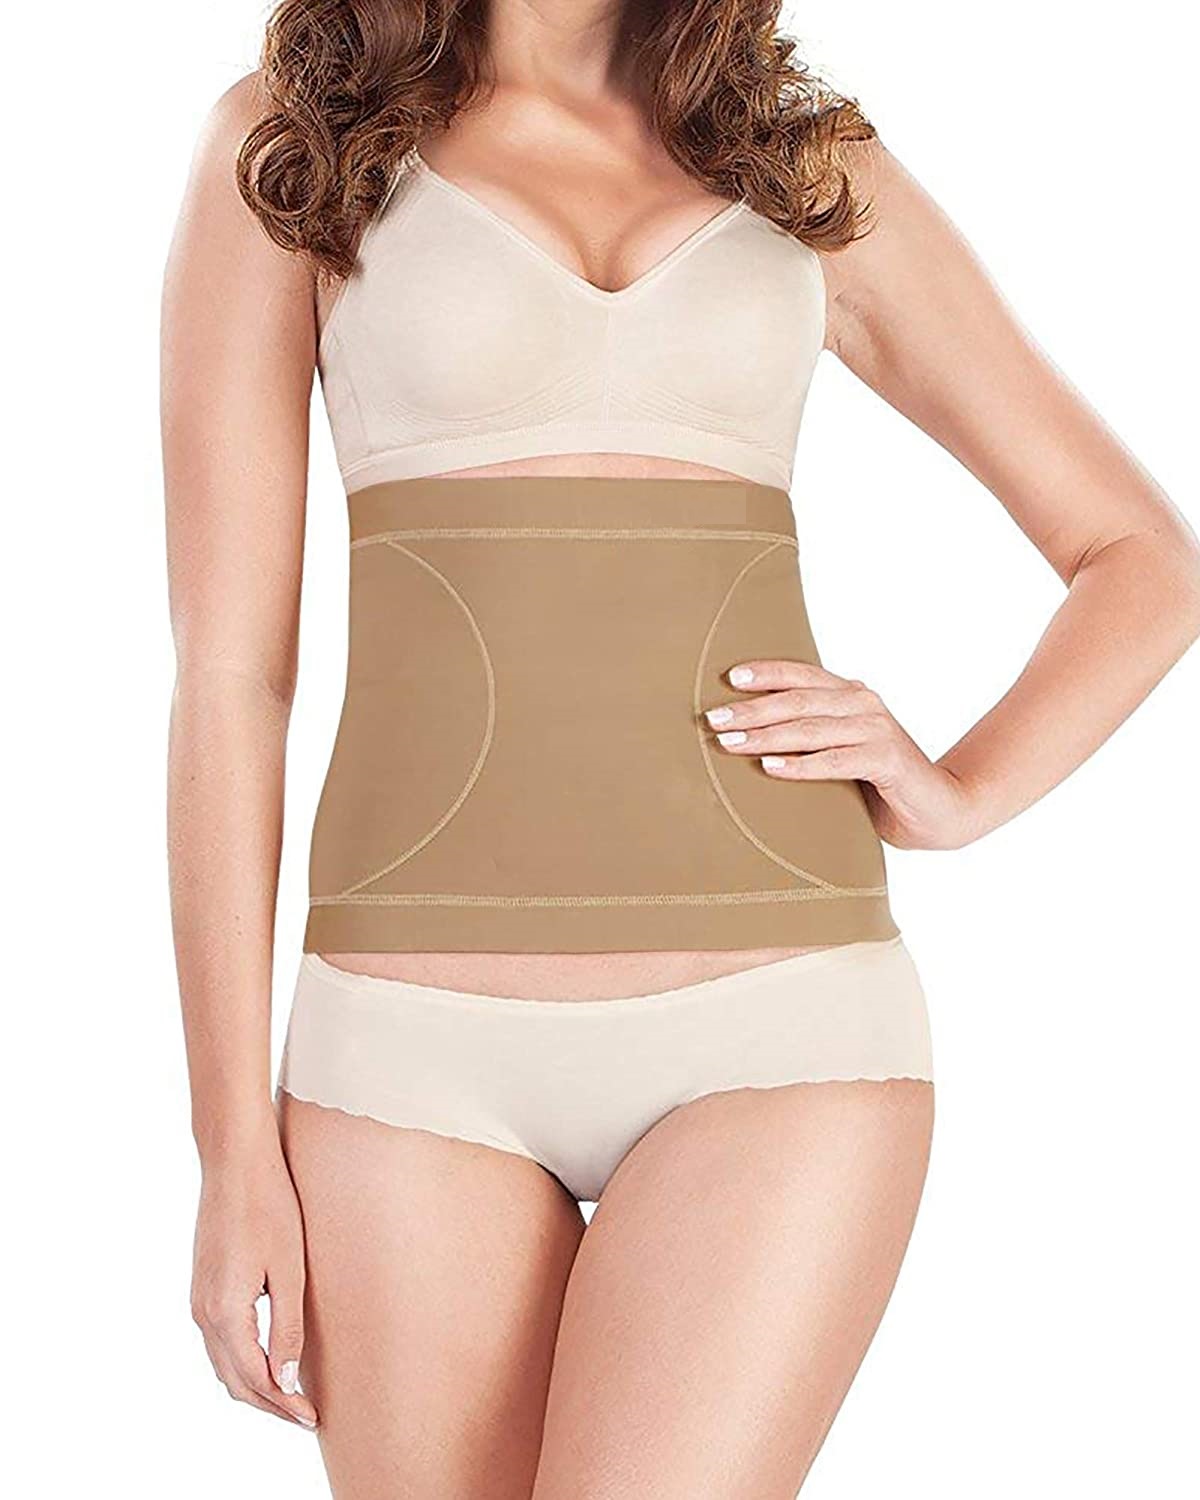 https://naricomfortwear.com/wp-content/uploads/2020/11/Nari-Comfort-Wear-3585-Women-Blended-Body-Waist-Shaper-Tummy-Tucker-Belt-1.jpg